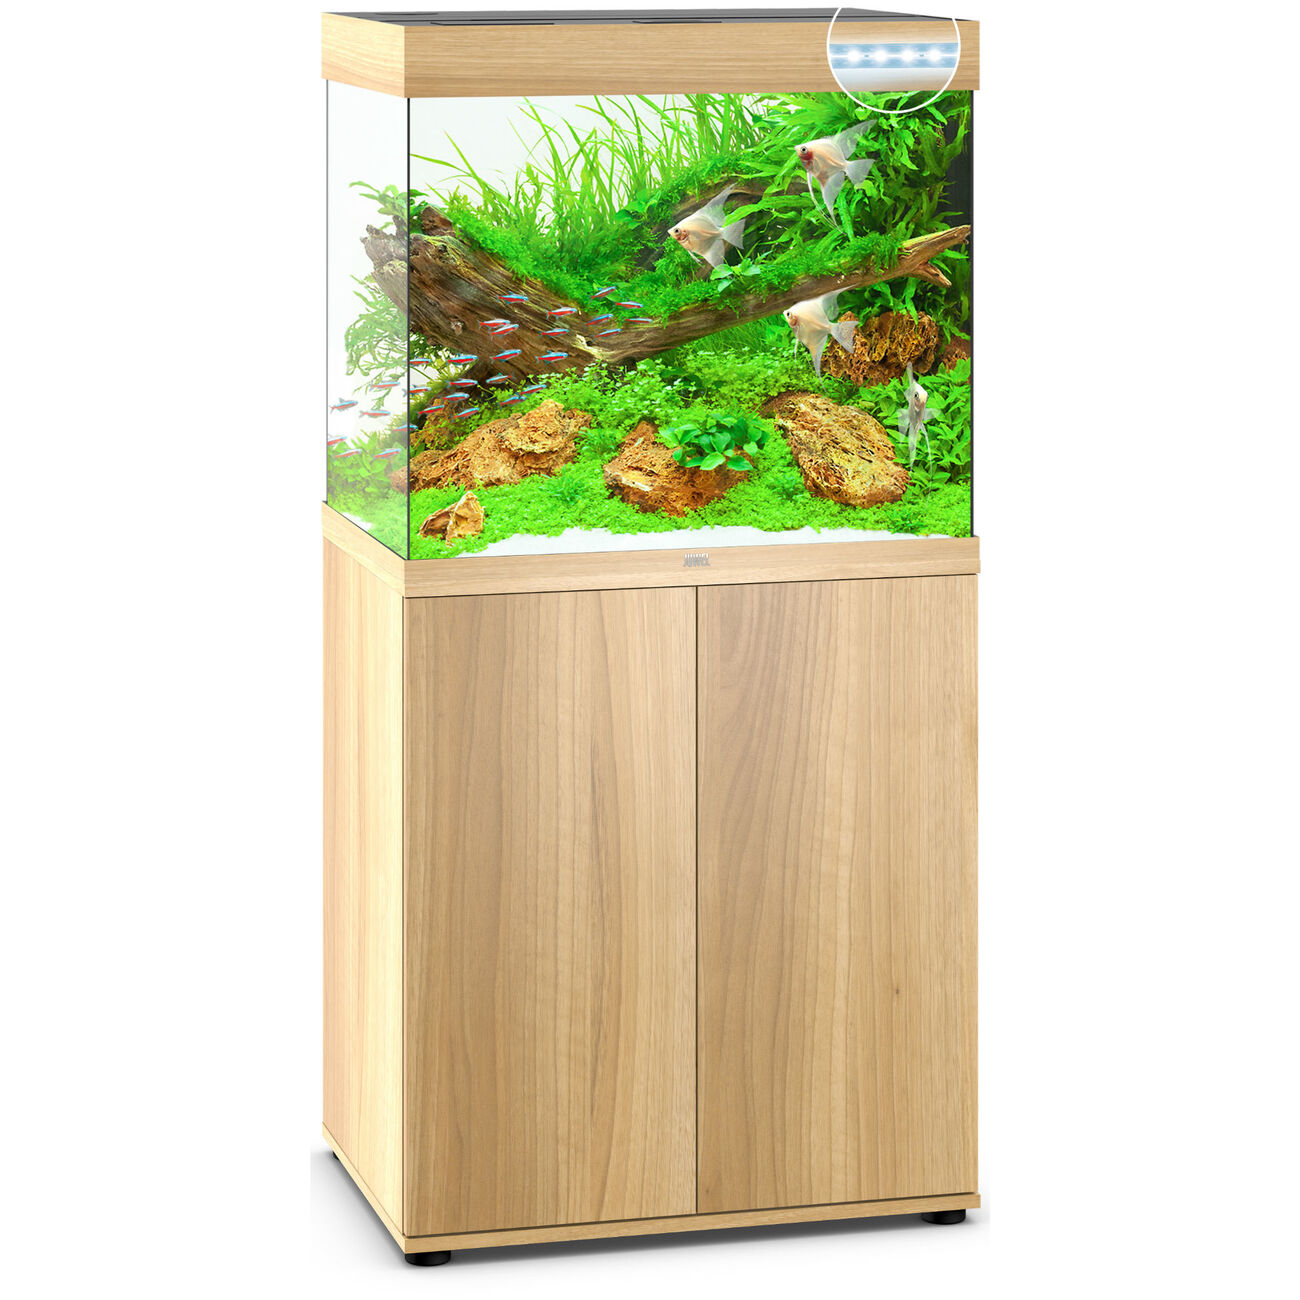 Juwel Lido 200 LED Aquarium mit Unterschrank, 200 Liter, helles Holz